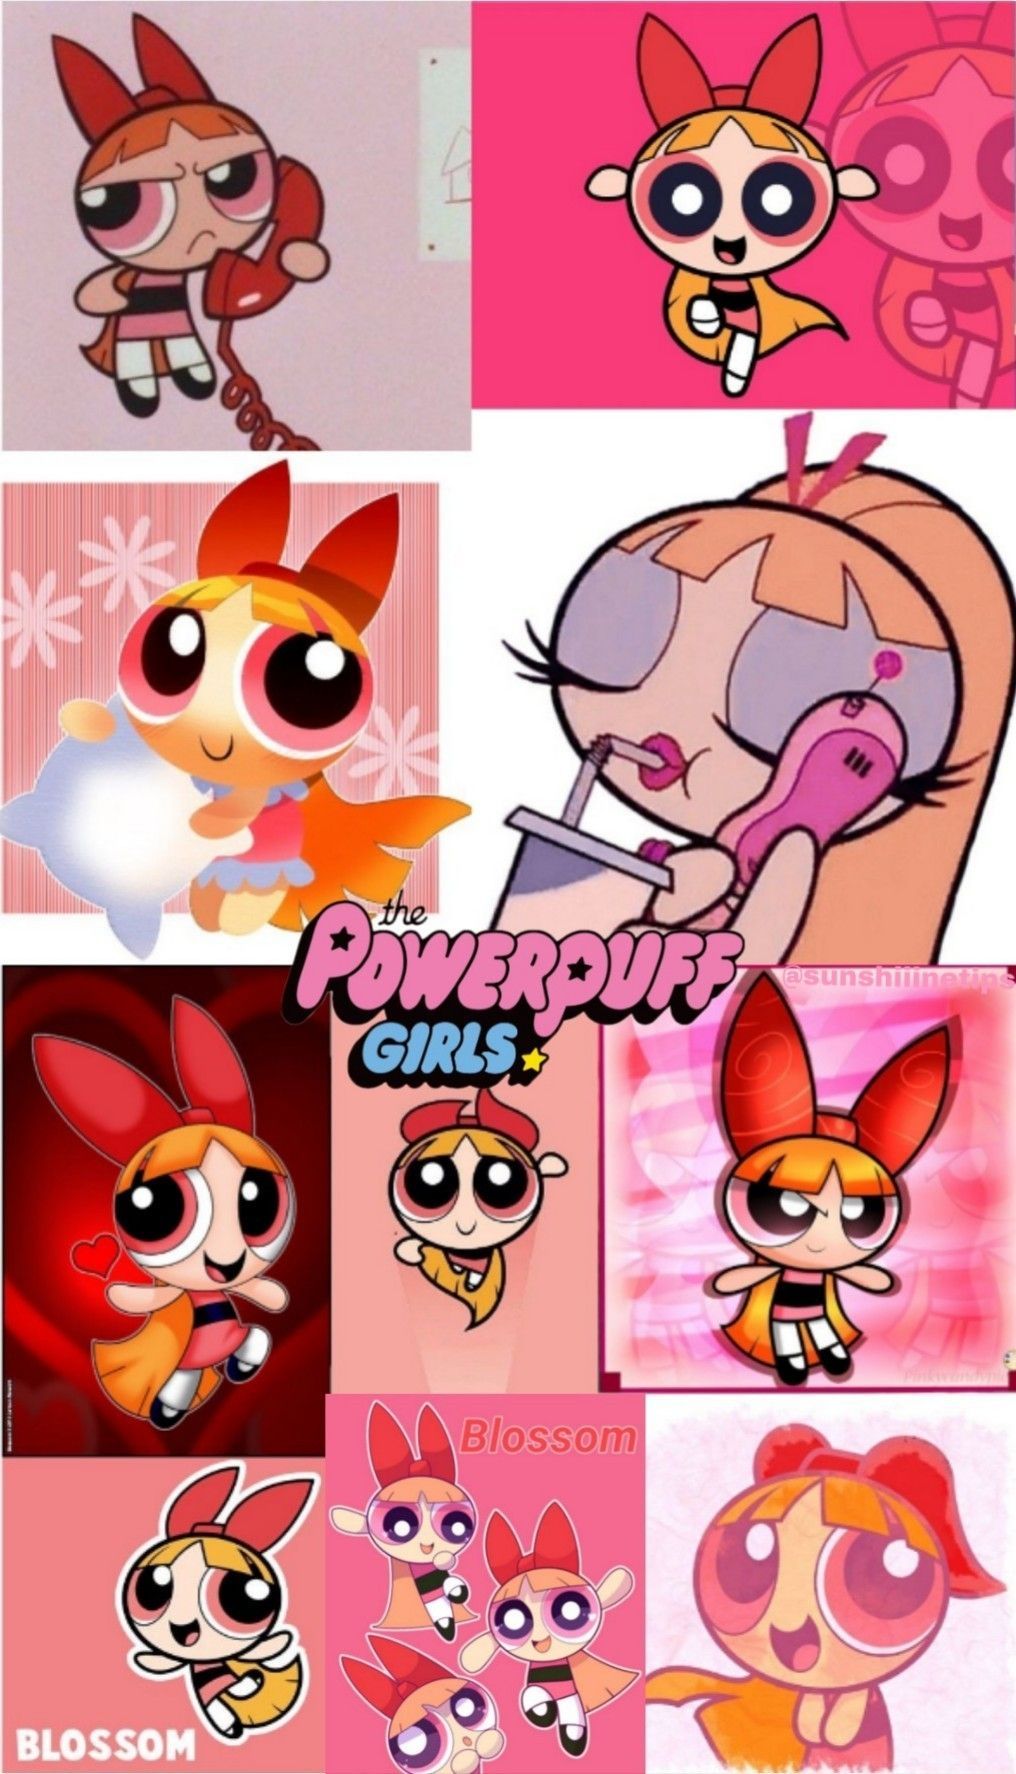 Powerpuff girls red wallpaper. Powerpuff girls wallpaper, Bad girl wallpaper, iPhone wallpaper girly